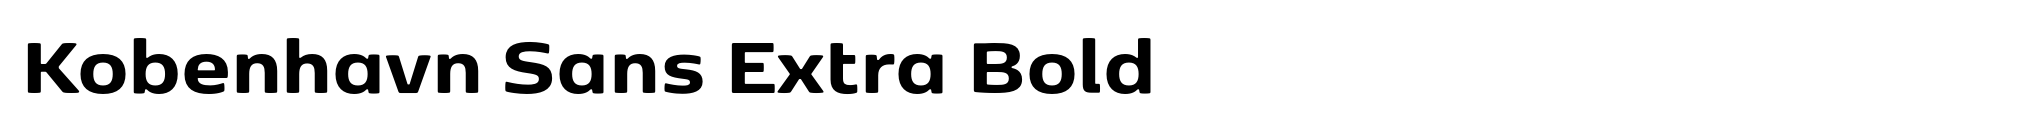 Kobenhavn Sans Extra Bold image